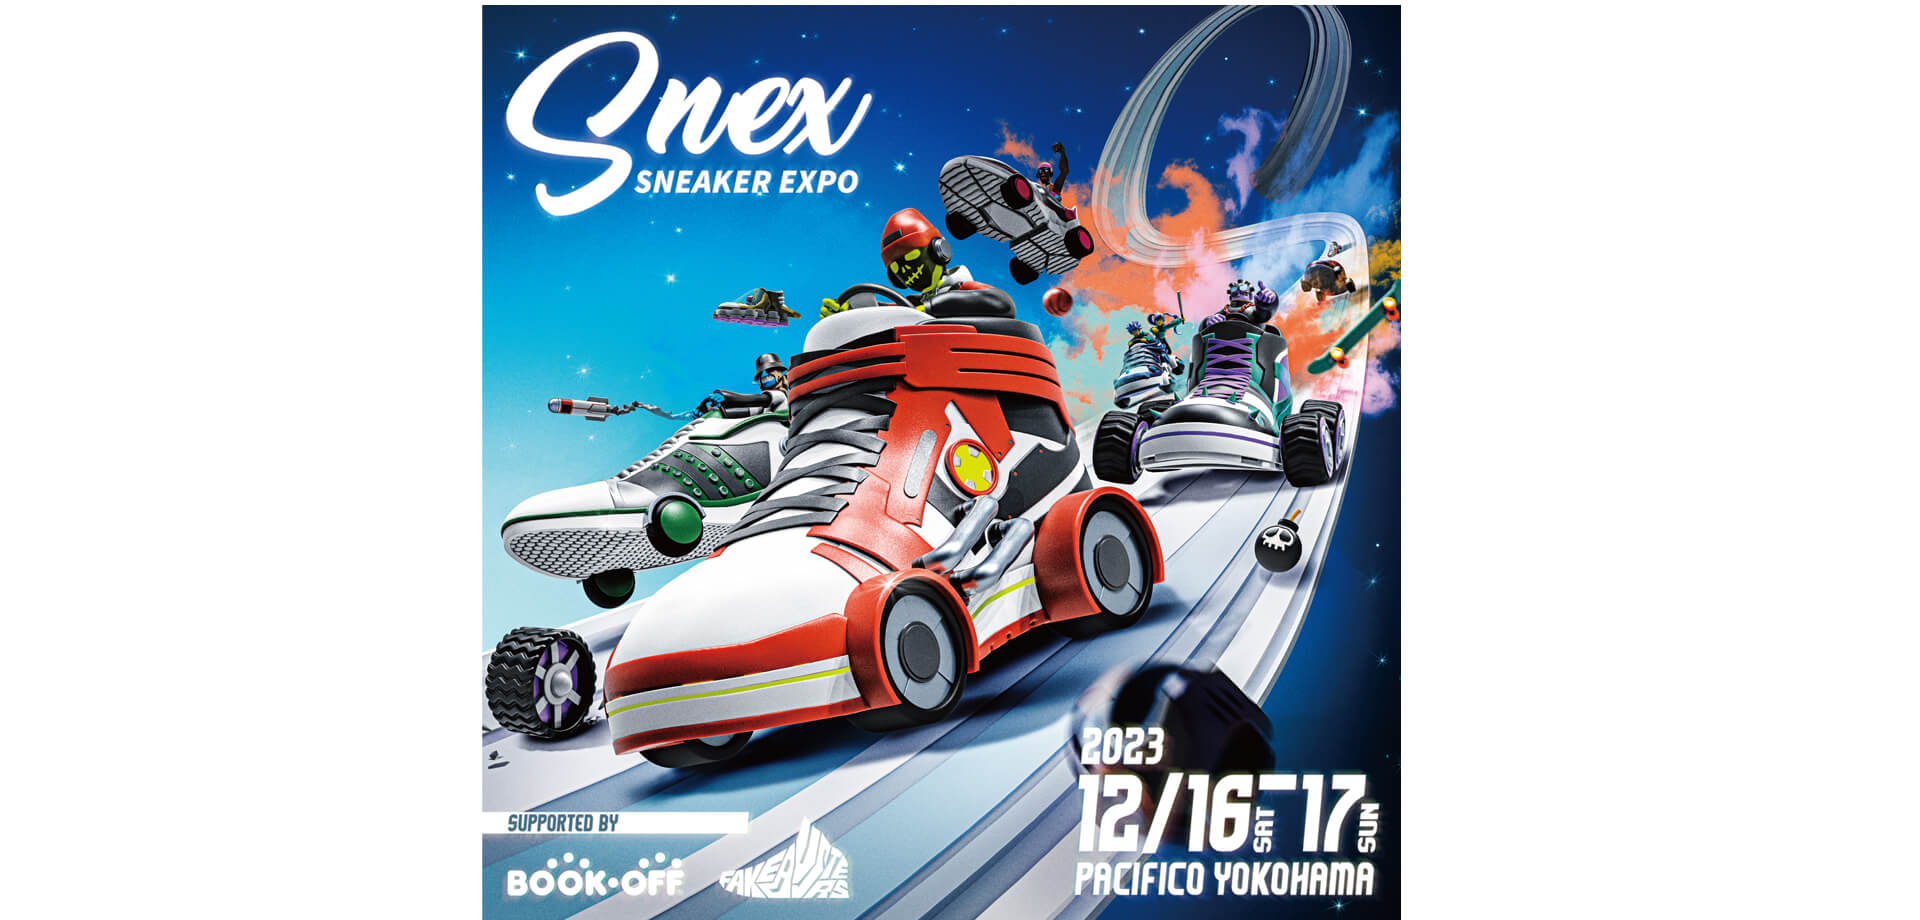 Snex/Sneaker Expo 2023 Yokohamaポスター